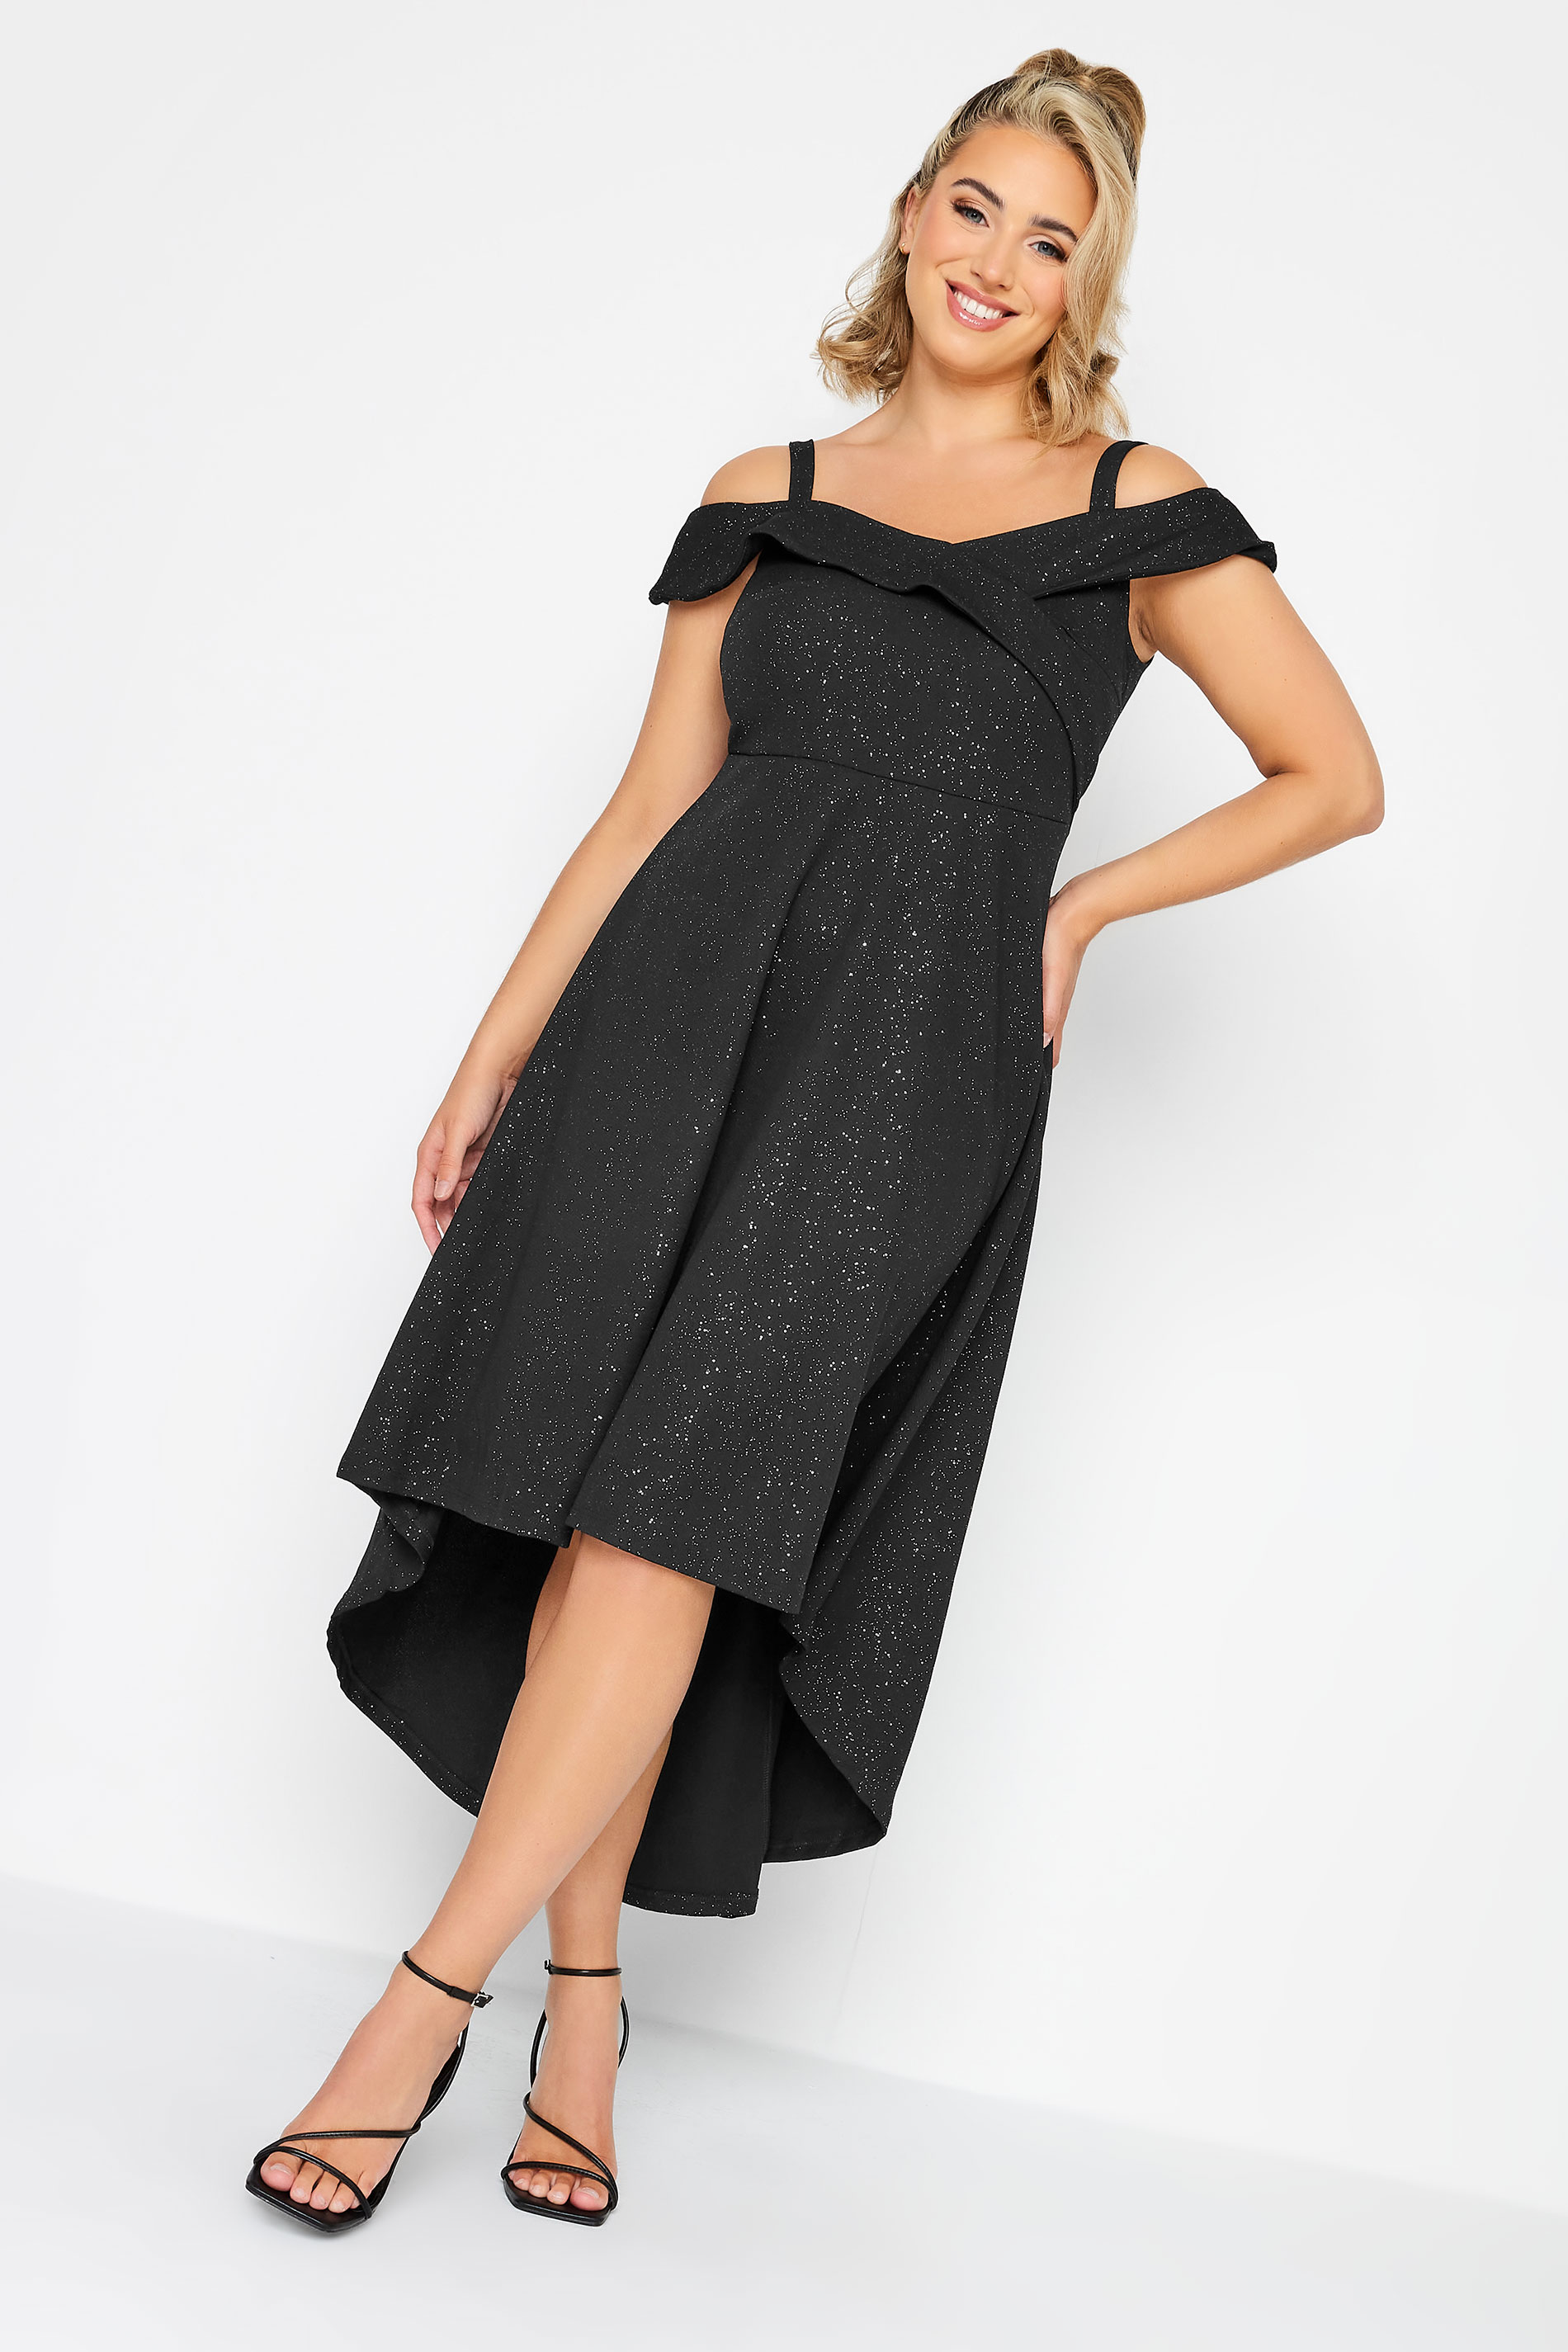 YOURS LONDON Plus Size Curve Black Glitter Bardot High Low Midi Bridesmaid Dress | Yours Clothing 2